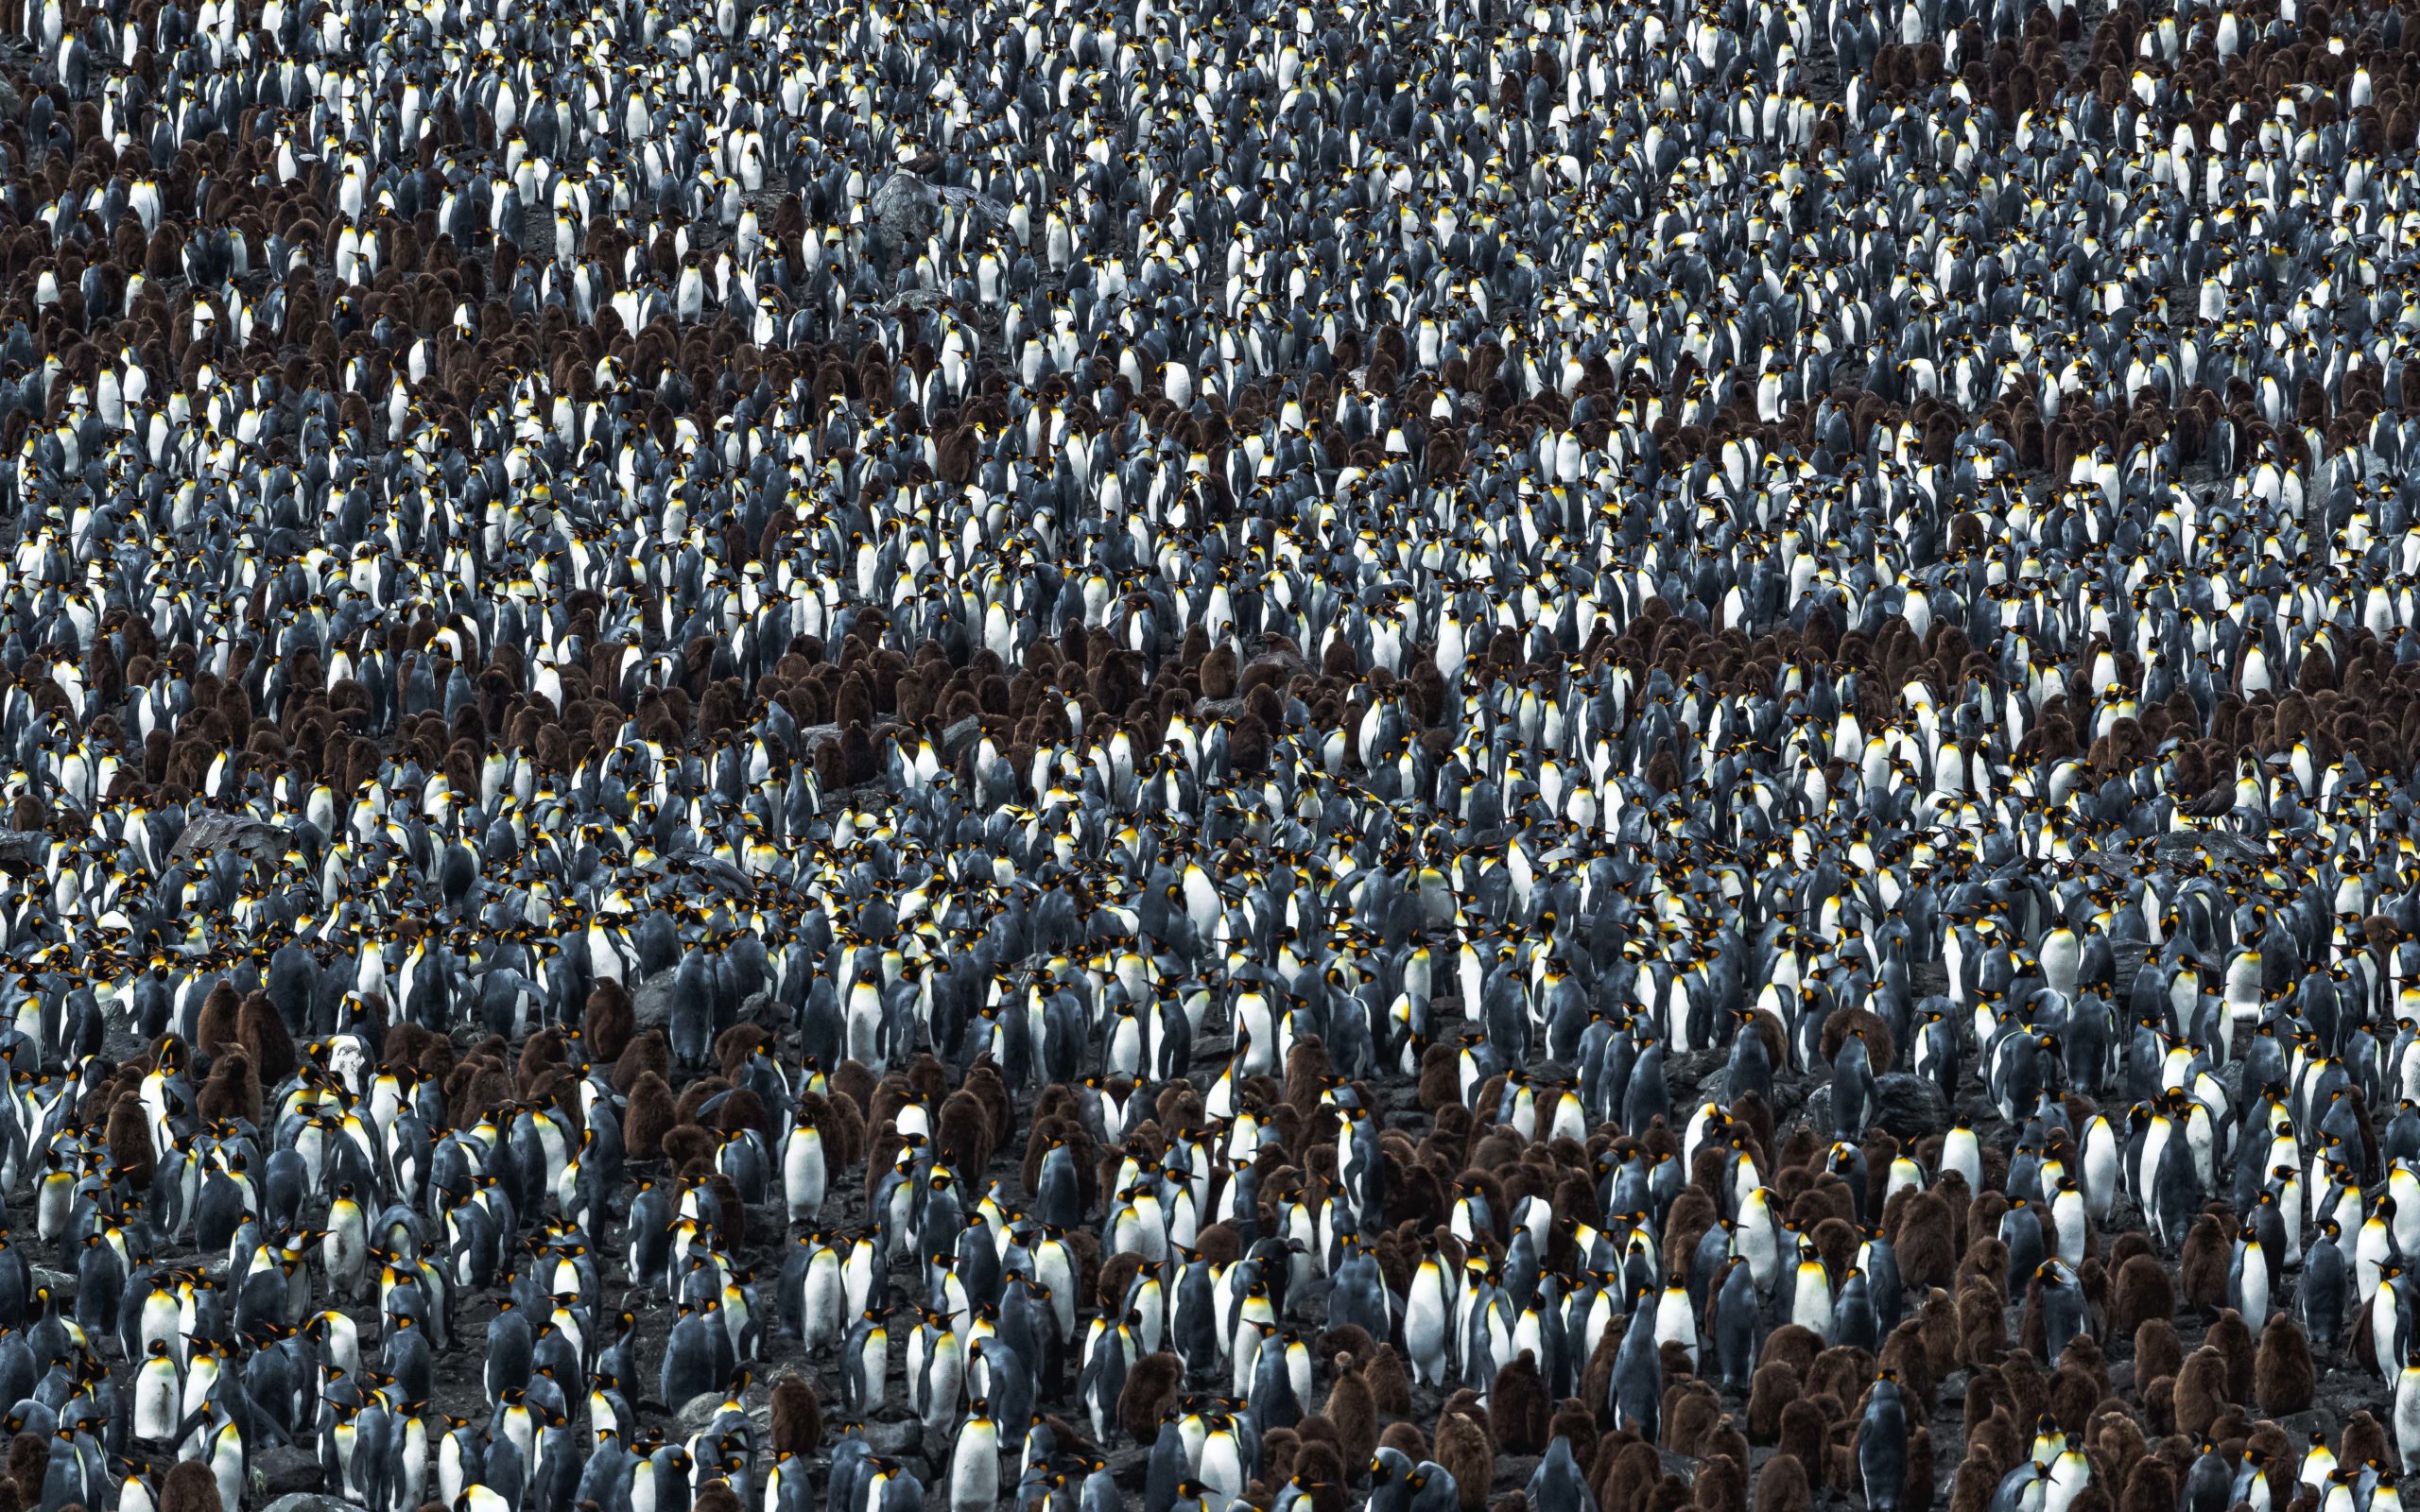 A large king penguin colony on South Georgia Island